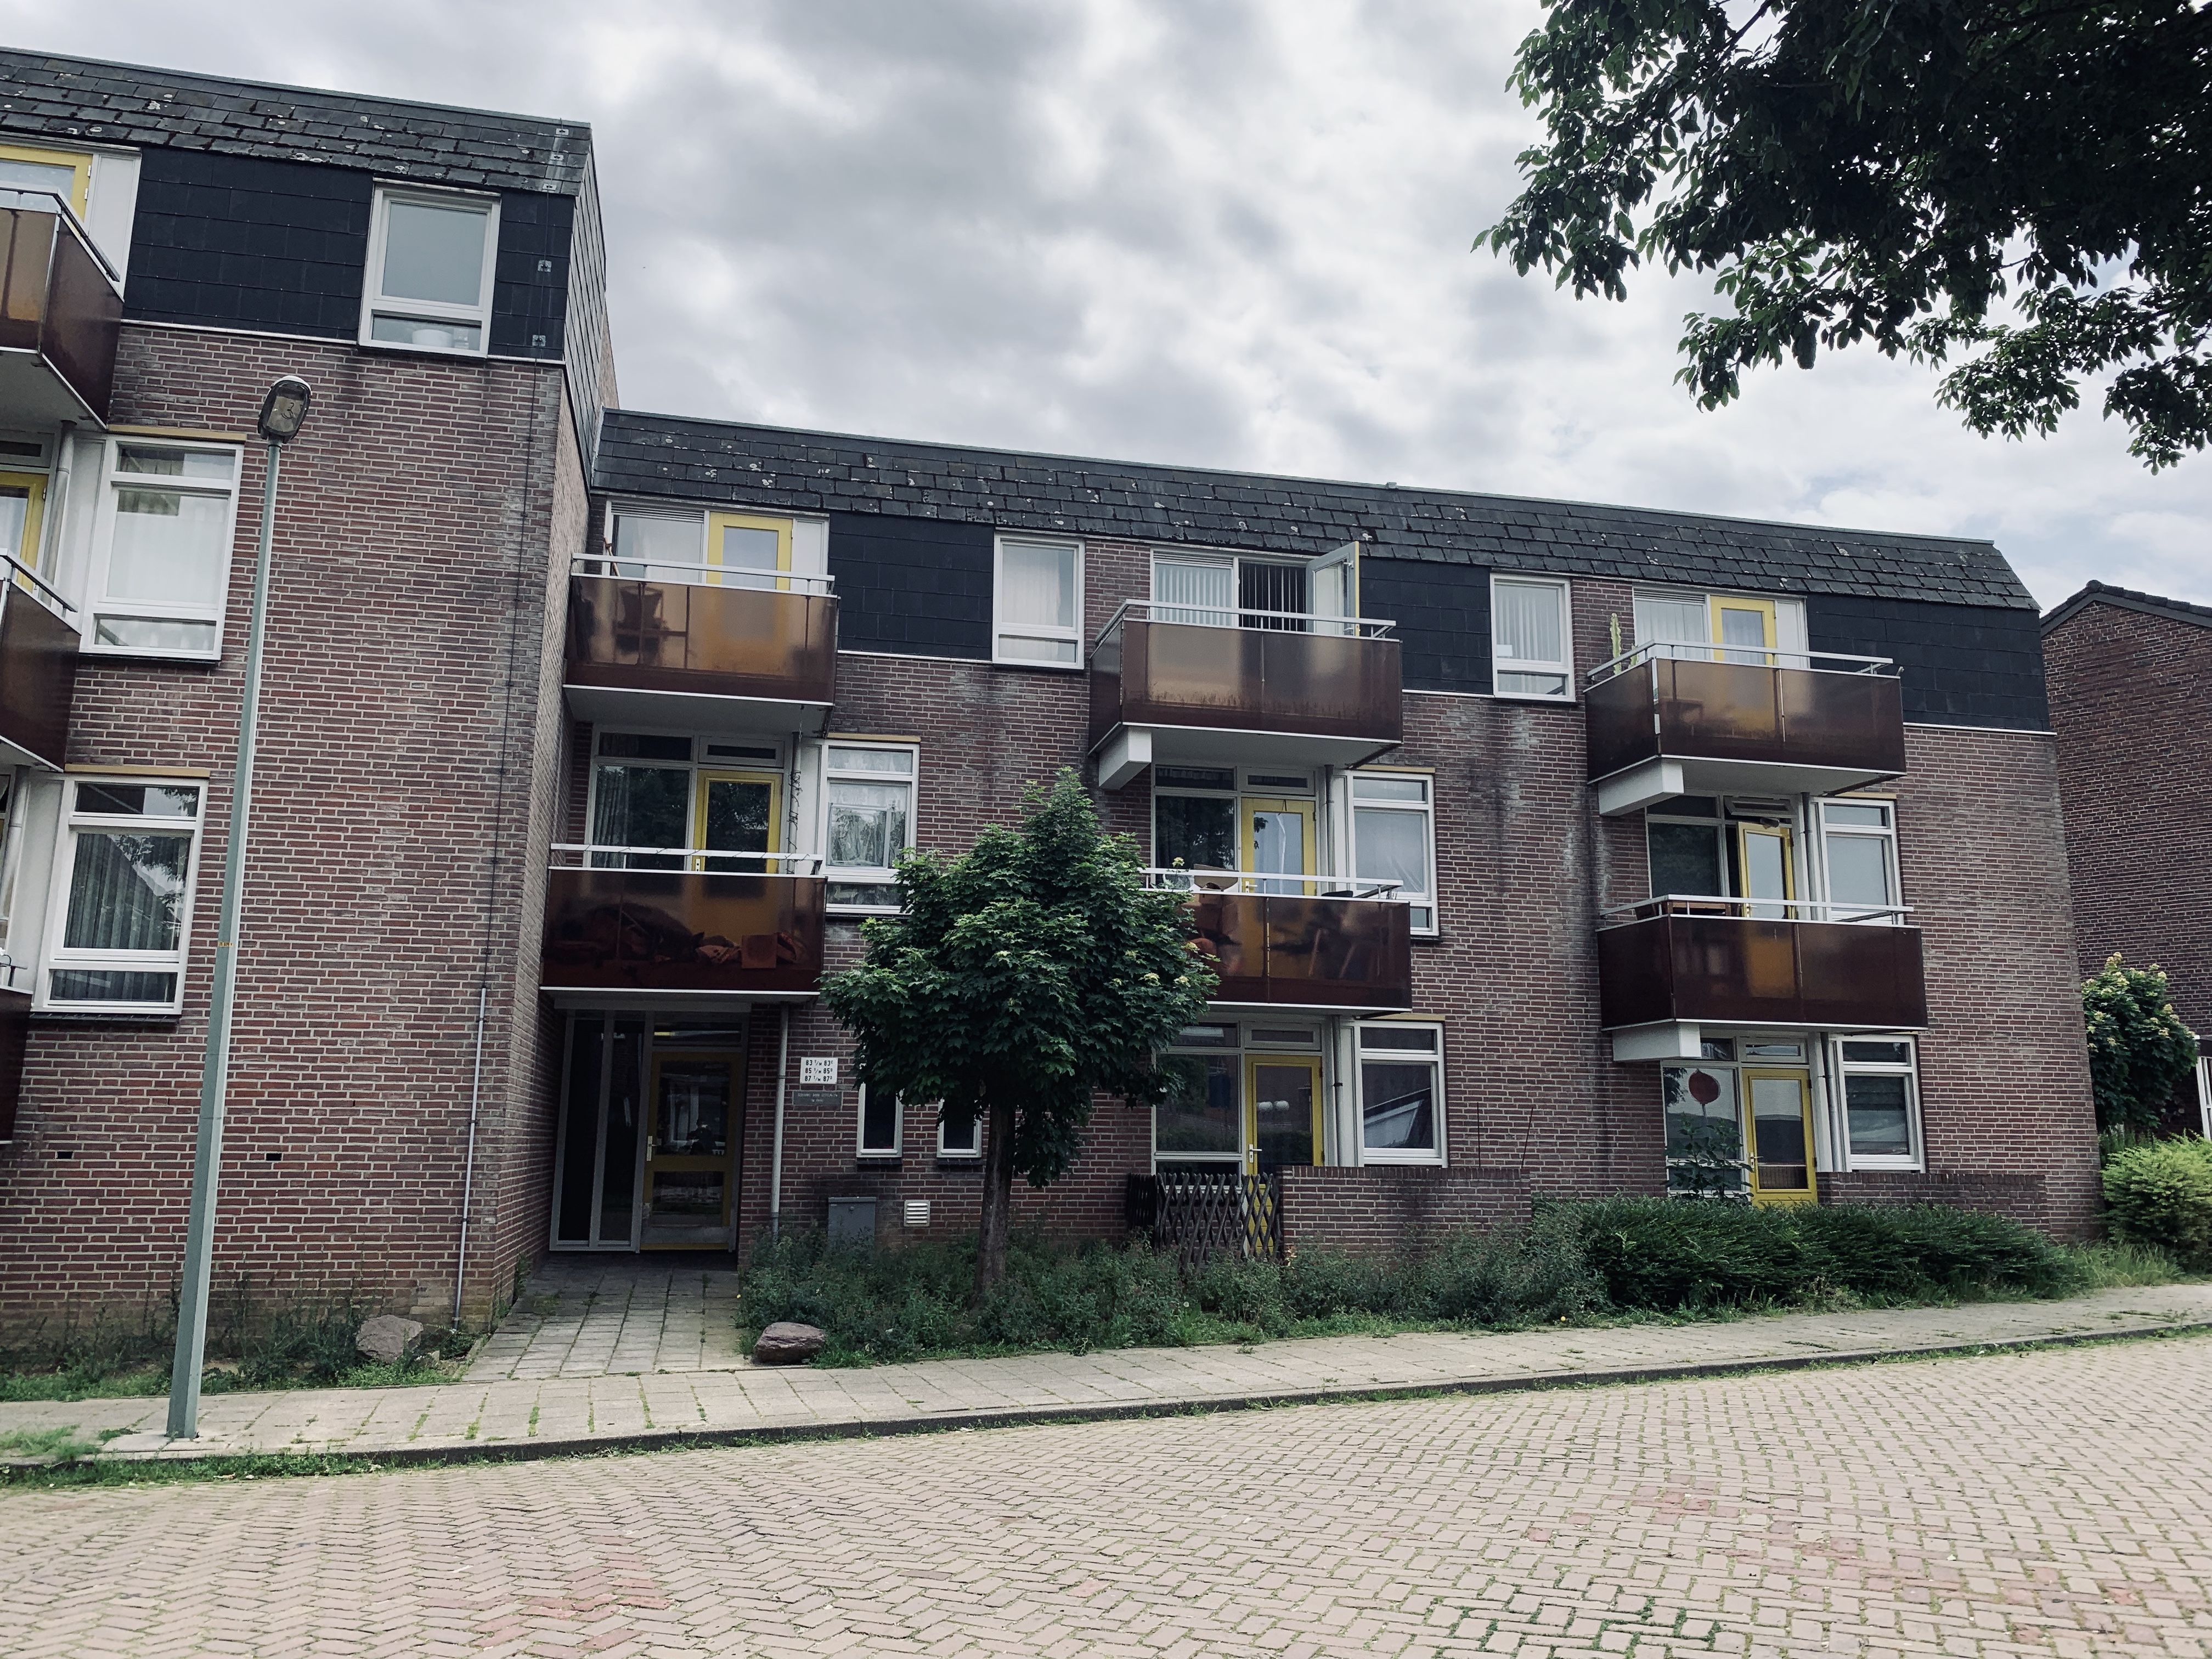 Burgemeester Slanghenstraat 87A, 6433 AT Hoensbroek, Nederland